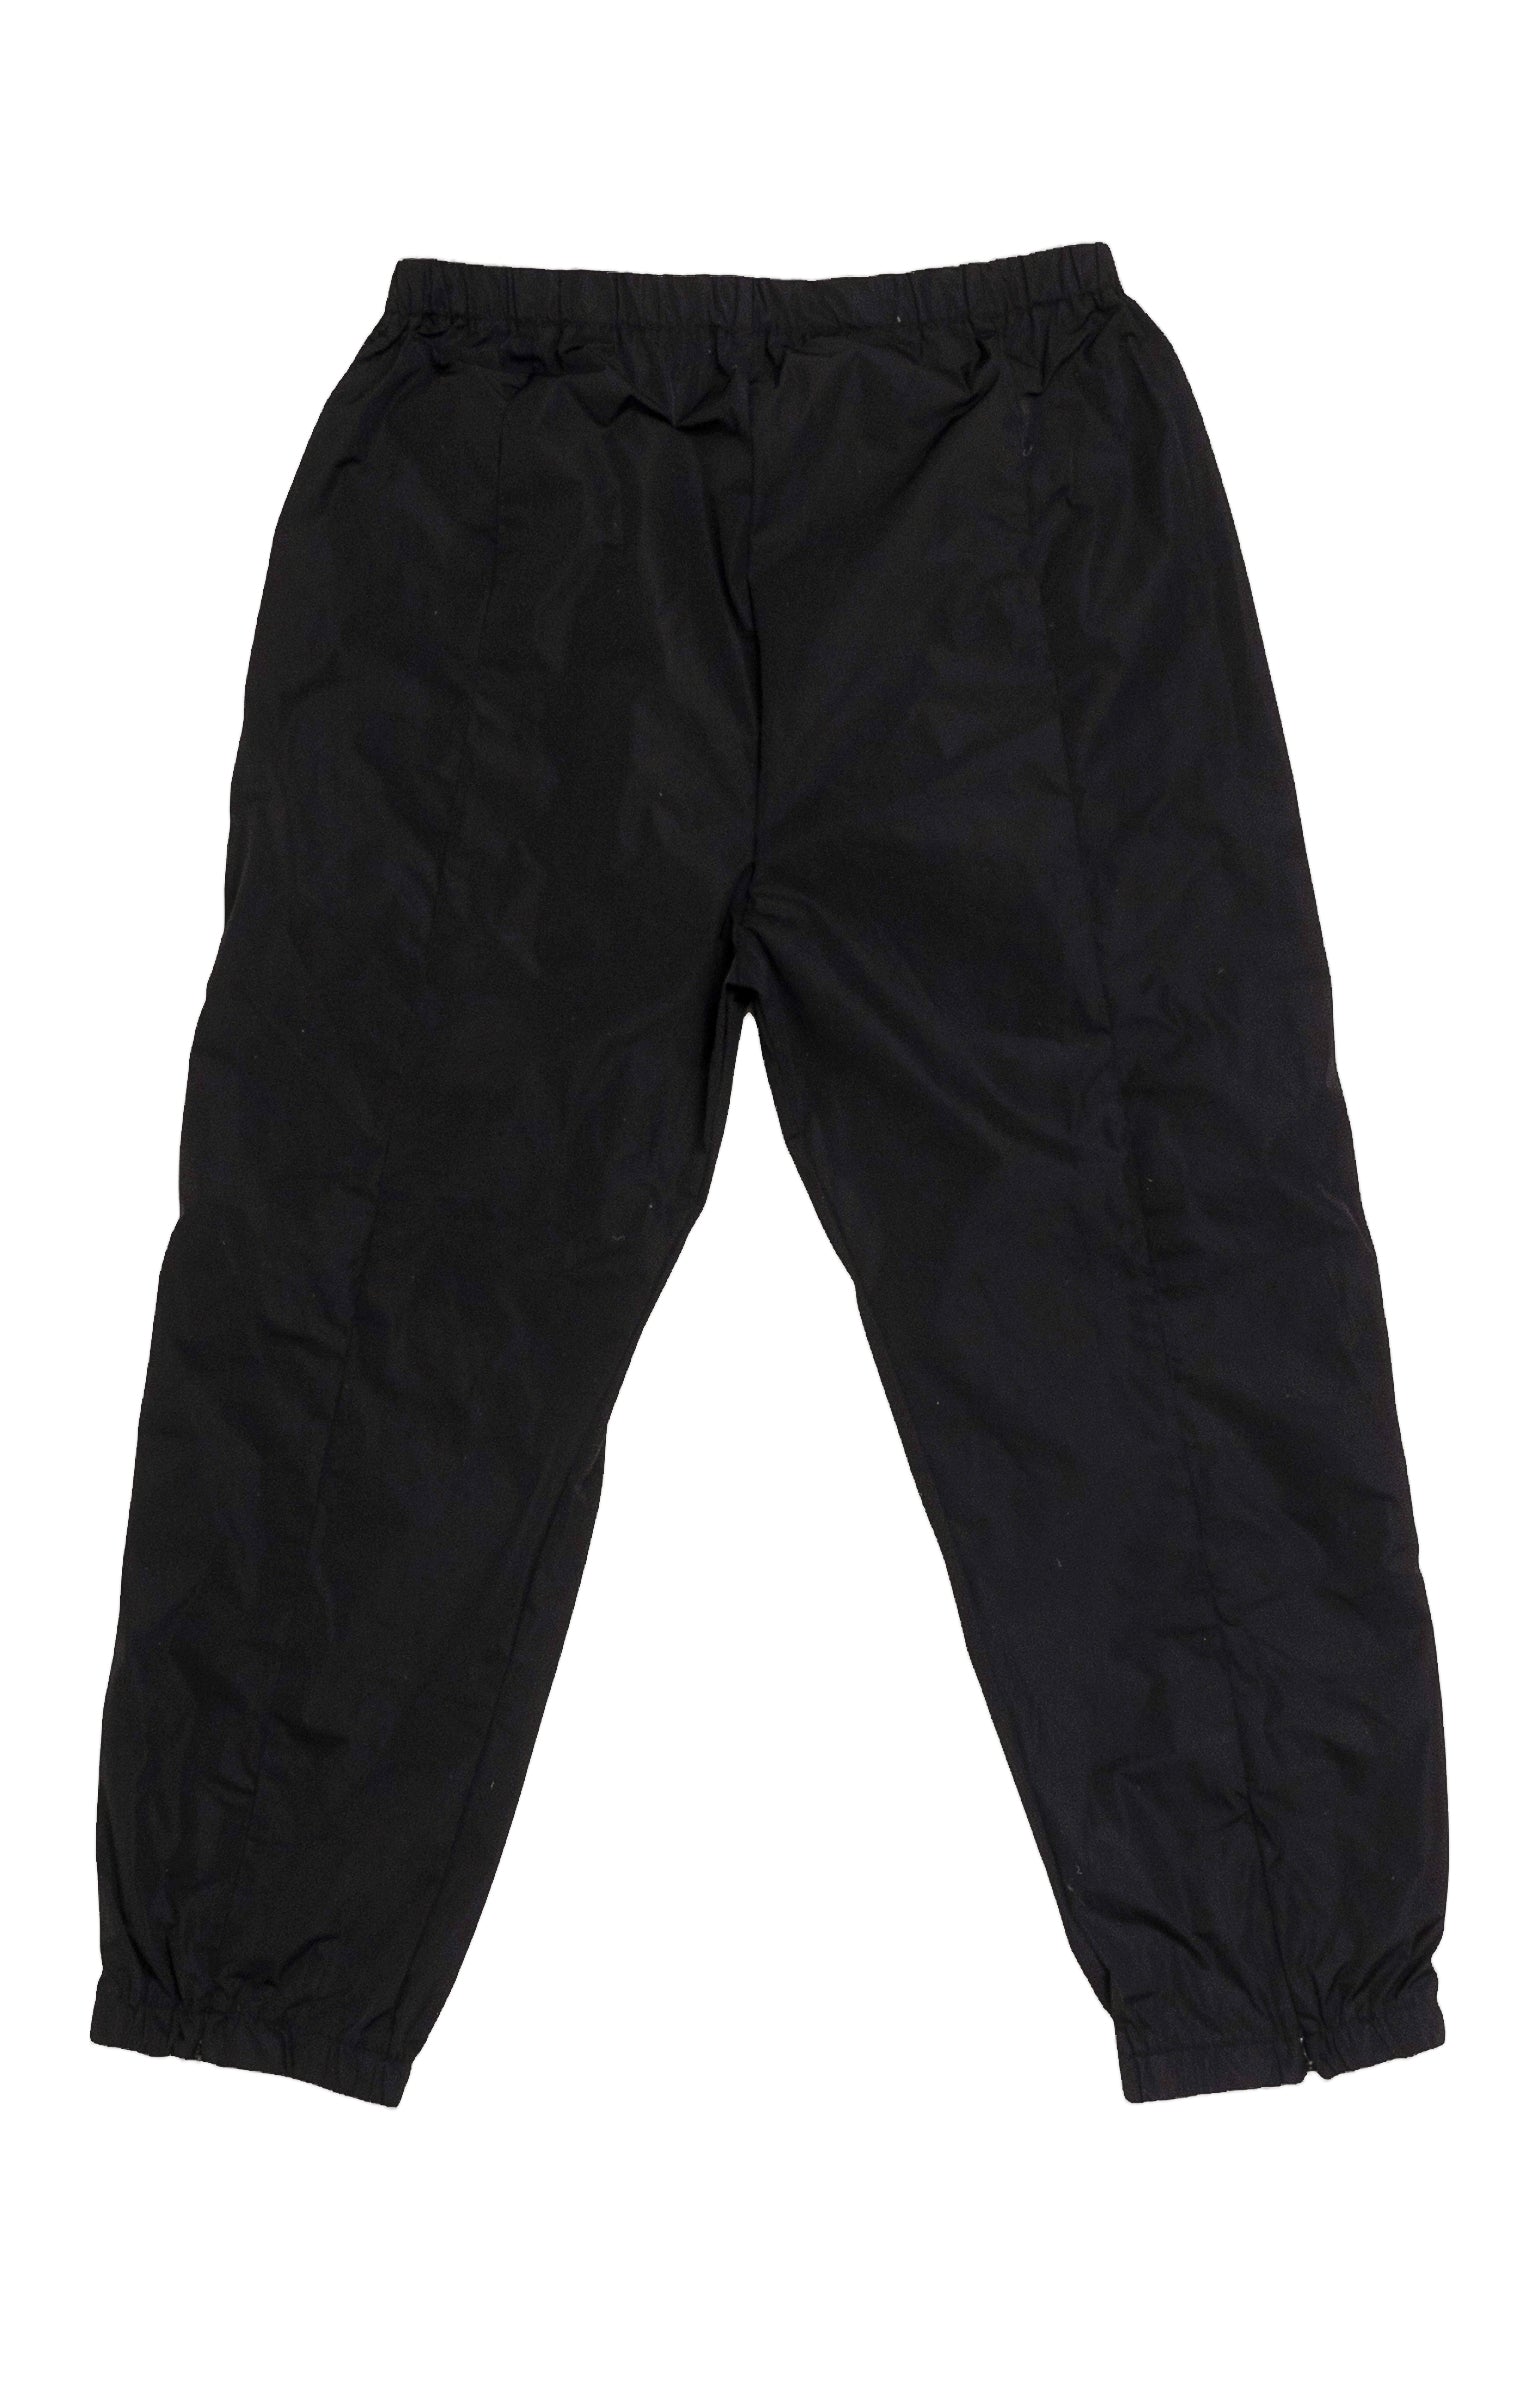 A-COLD-WALL* (RARE) Pants Size: XL